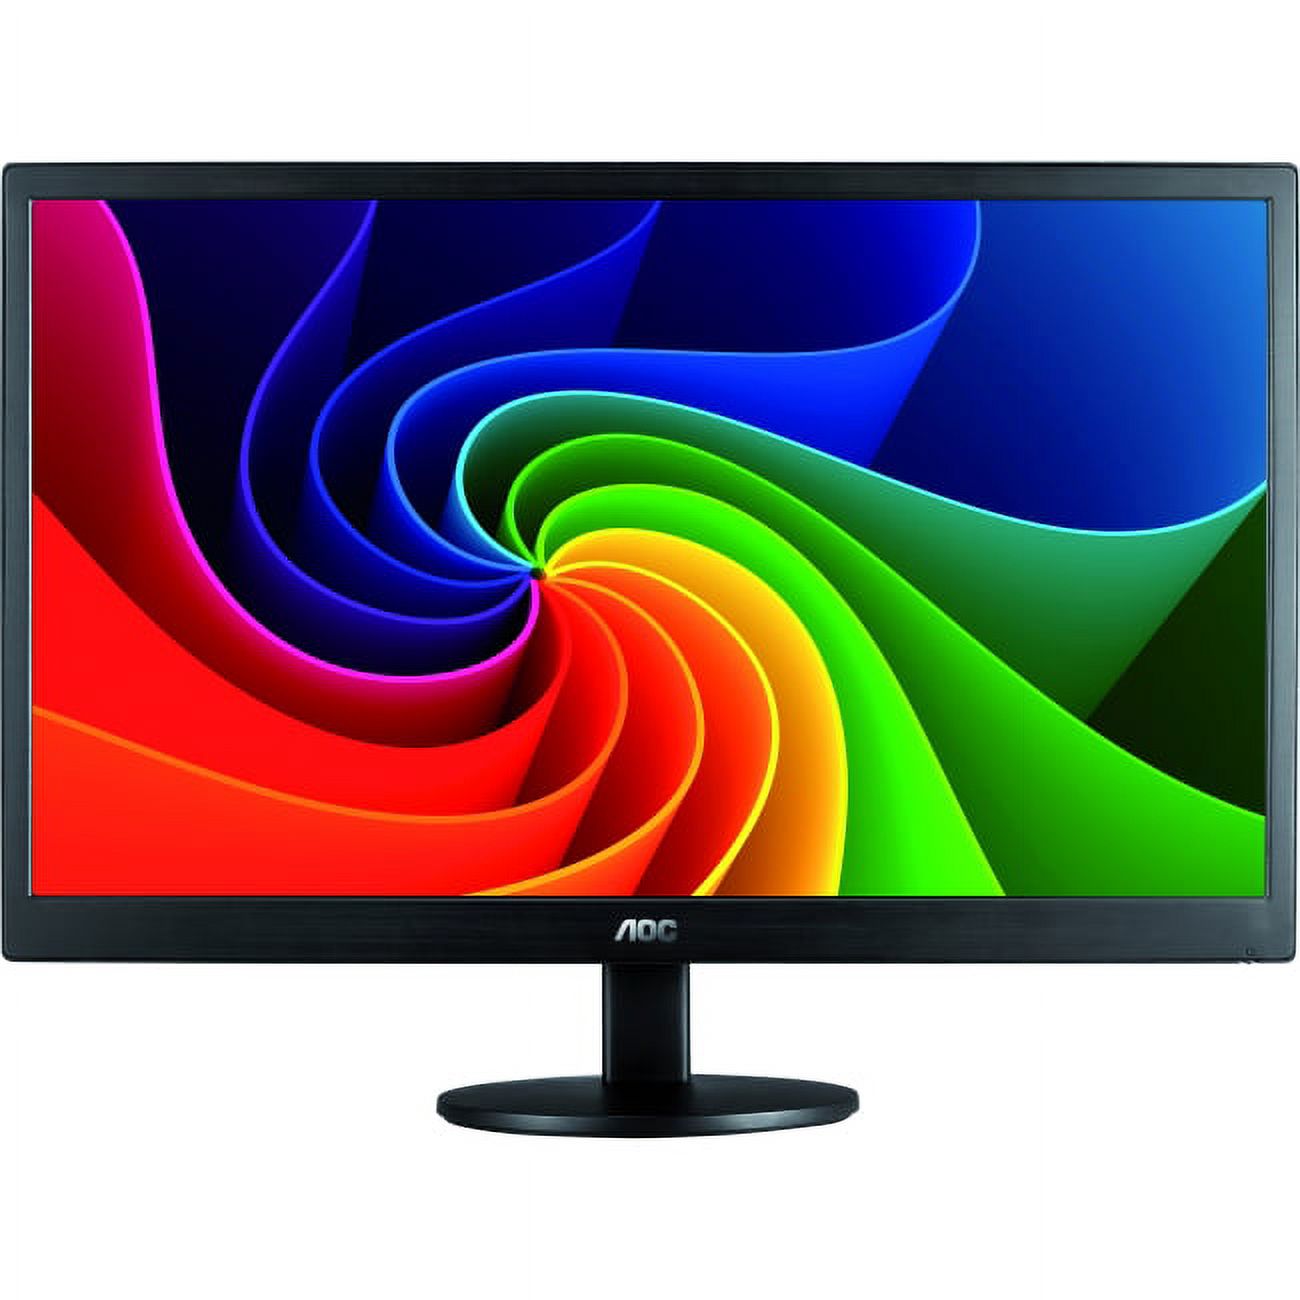 AOC E970SWN 18.5" LED LCD Monitor - 16:9 - 5 ms - Adjustable Display Angle - 1366 x 768 - 16.7 Million Colors - 200 Nit - 700:1 - WXGA - VGA - 15 W - Black - RoHS, ENERGY STAR 6.0, EuP, EPEAT Silver - image 1 of 4